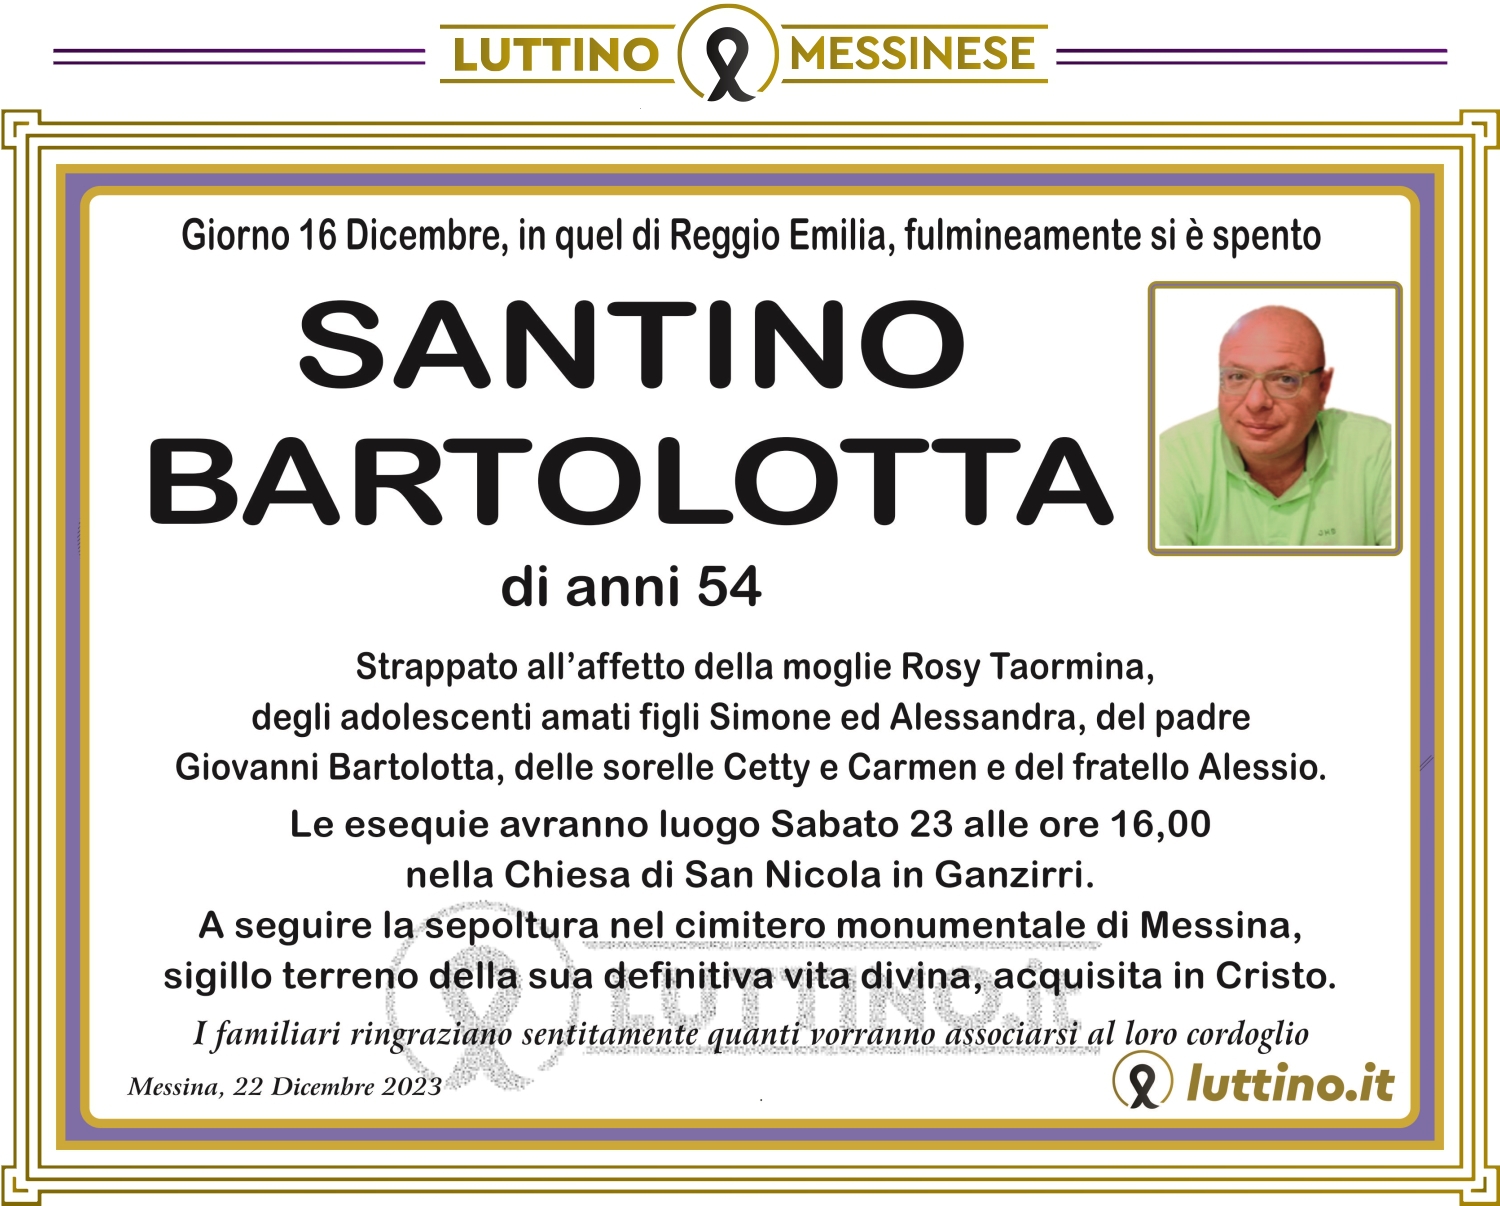 Santino Bartolotta